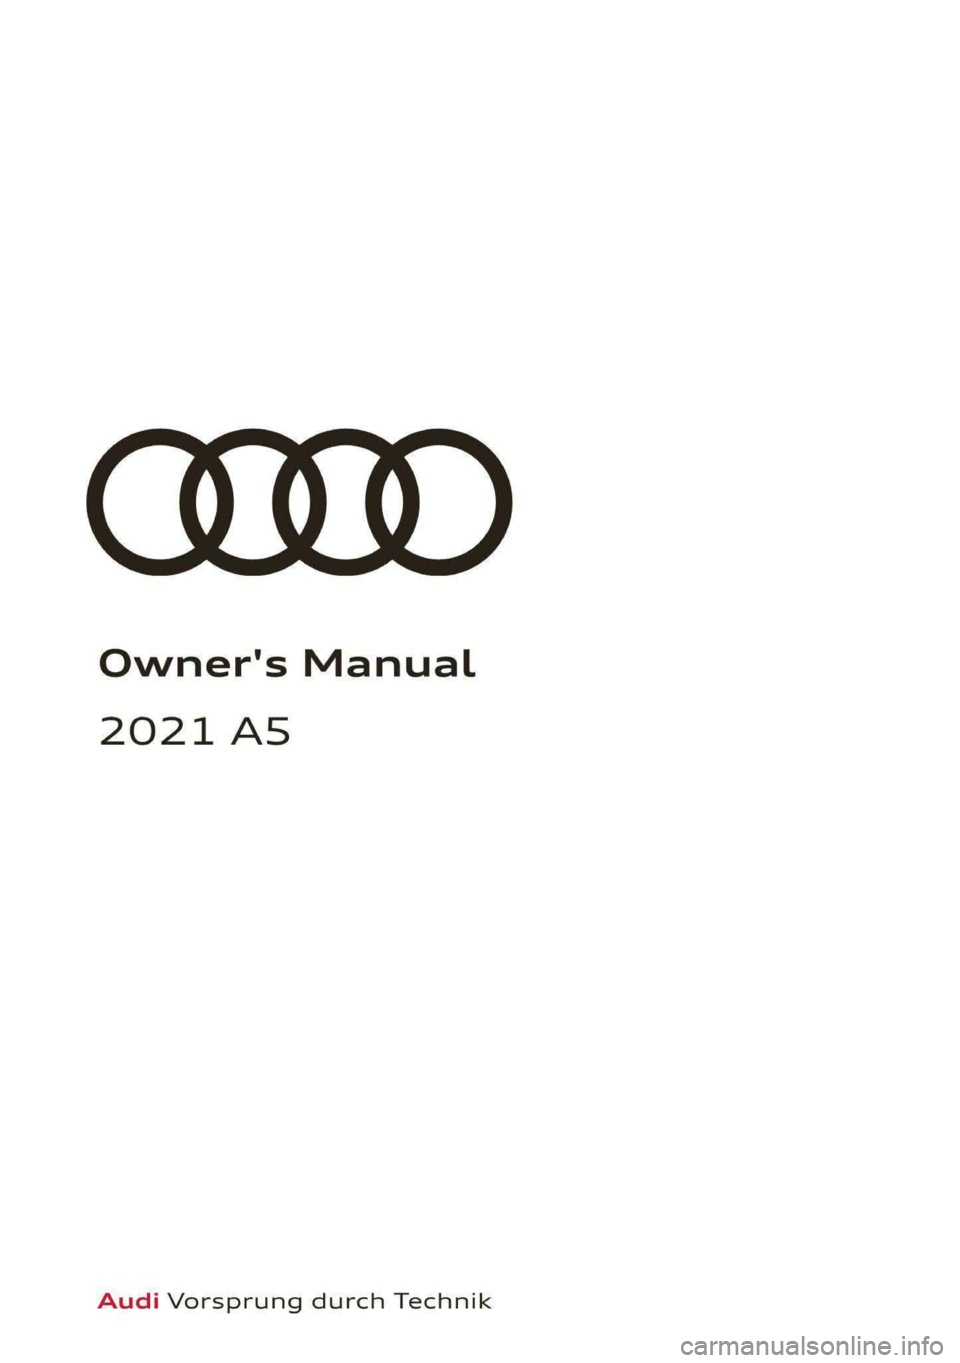 AUDI A5 2021  Owners Manual Owner's Manual 
2021 AS 
Audi Vorsprung durch Technik  